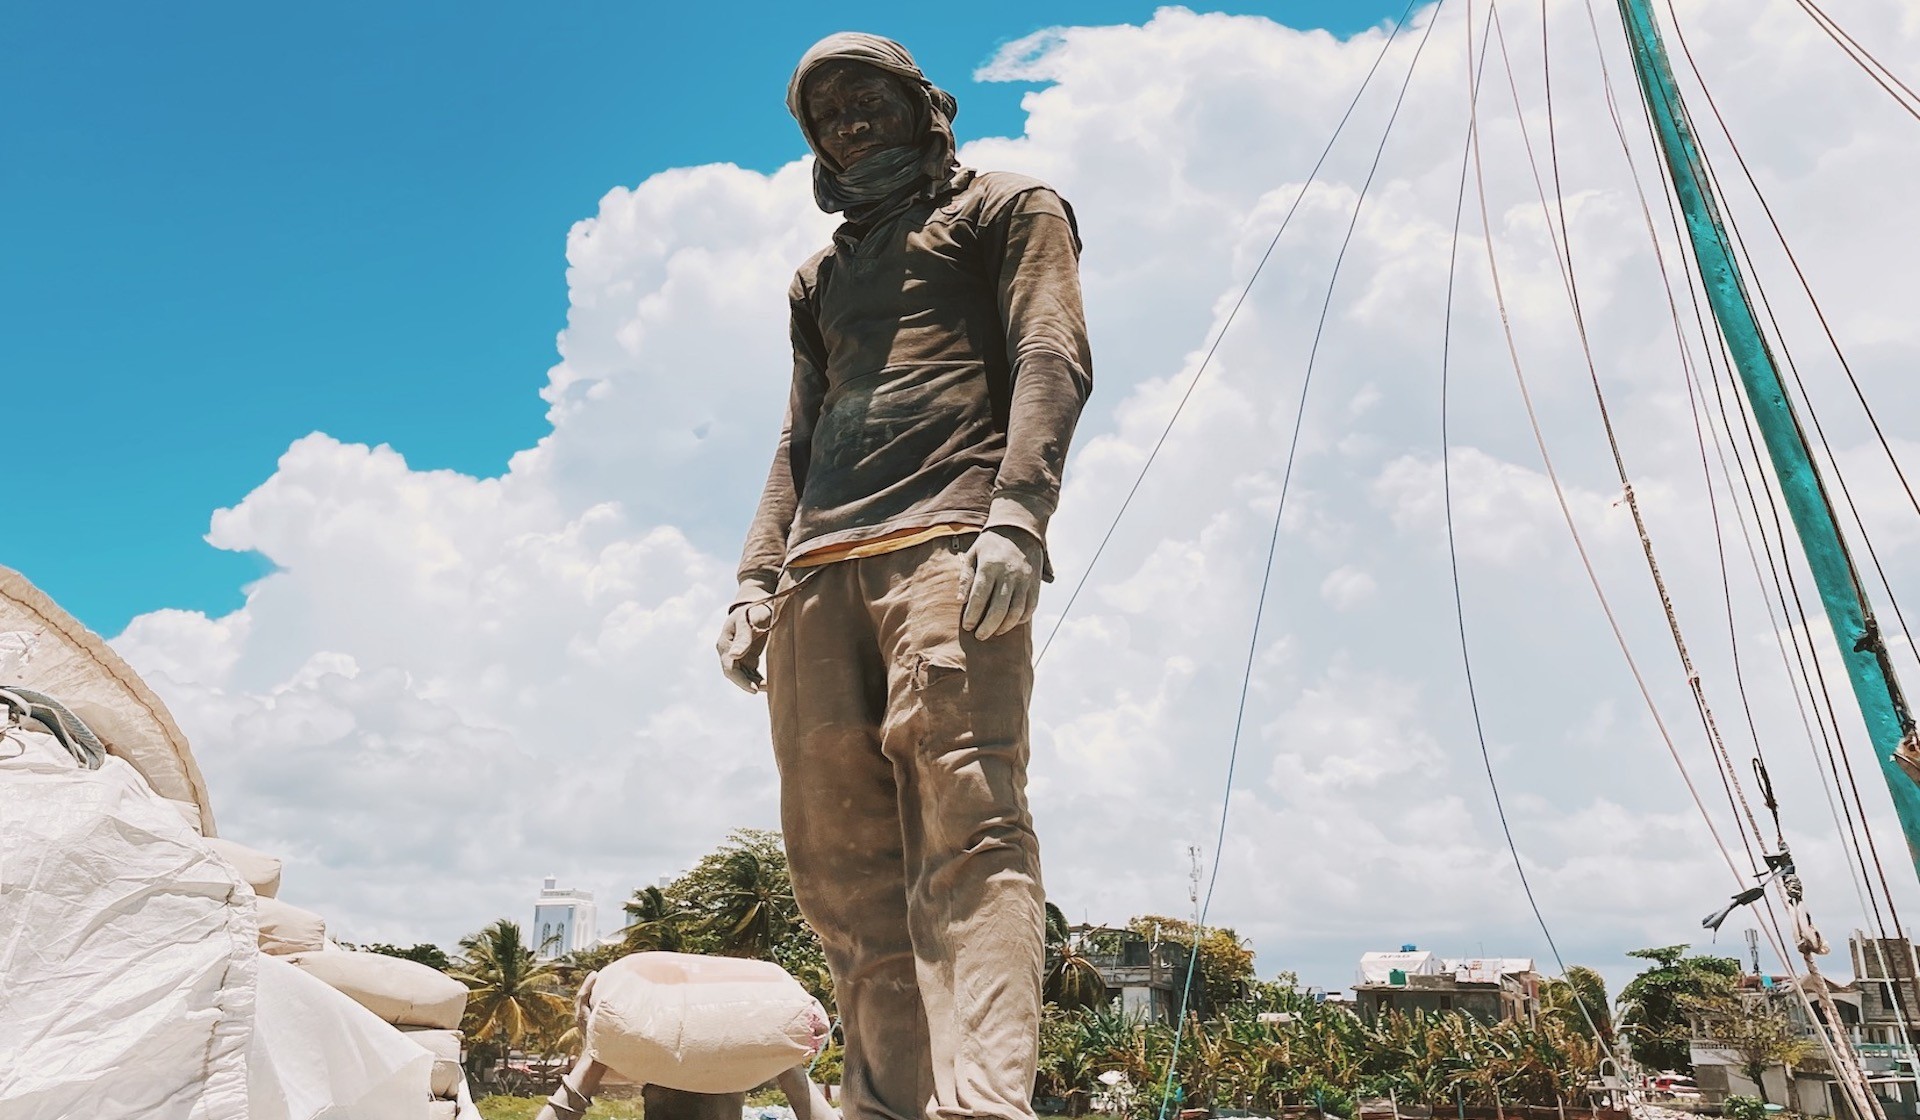 Haitian Heritage Museum Presents: La Sud: The South Image